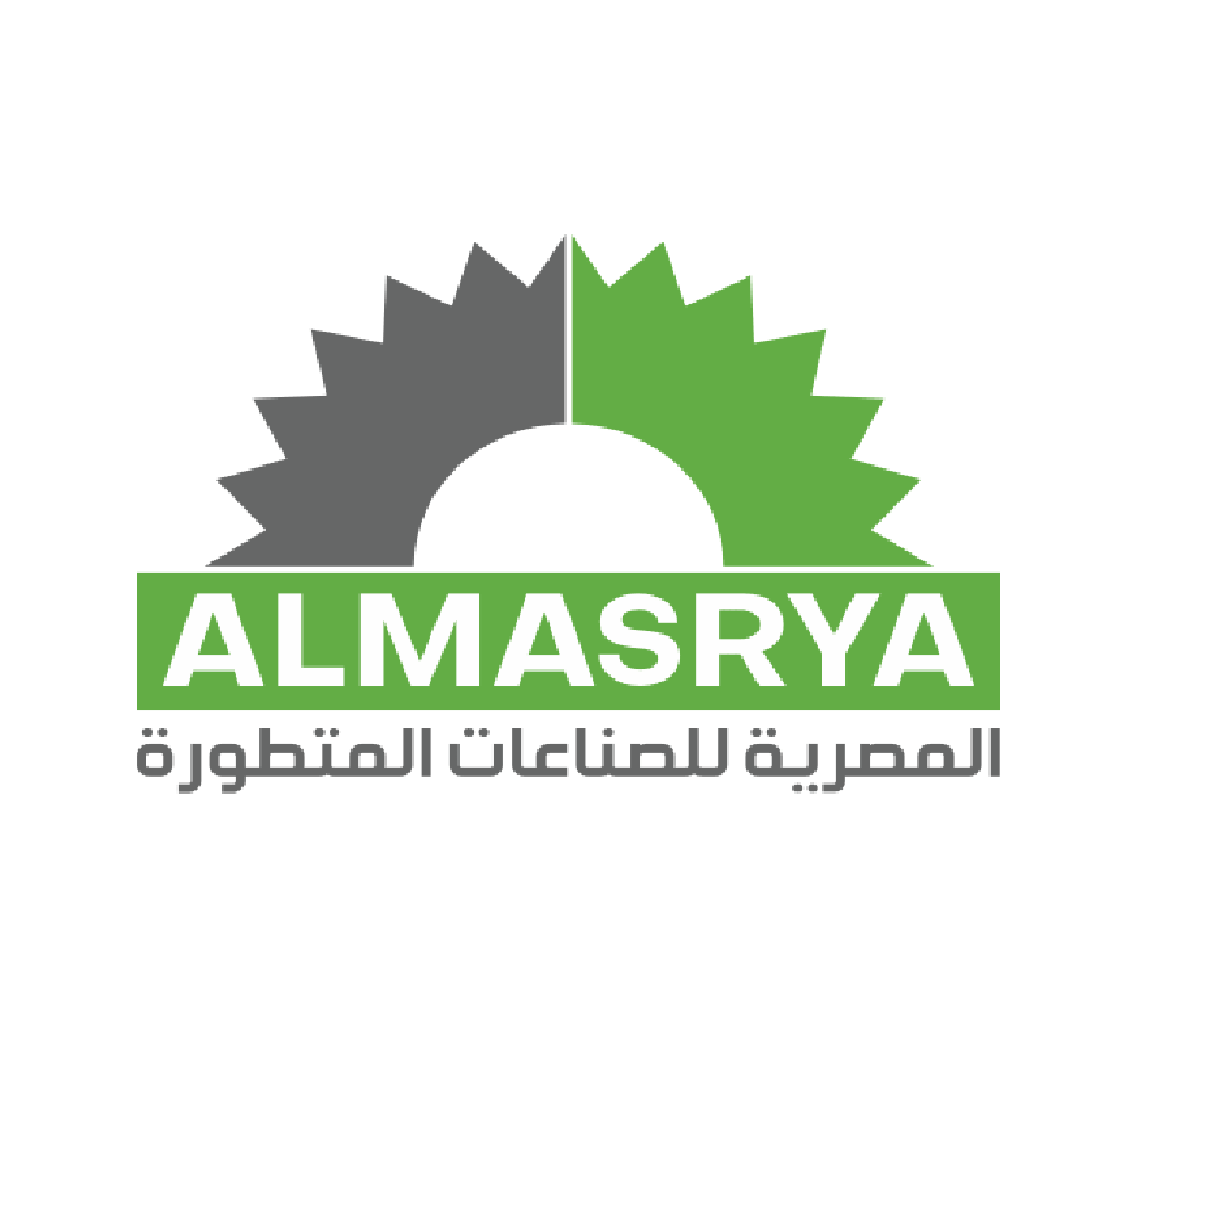 Almasrya